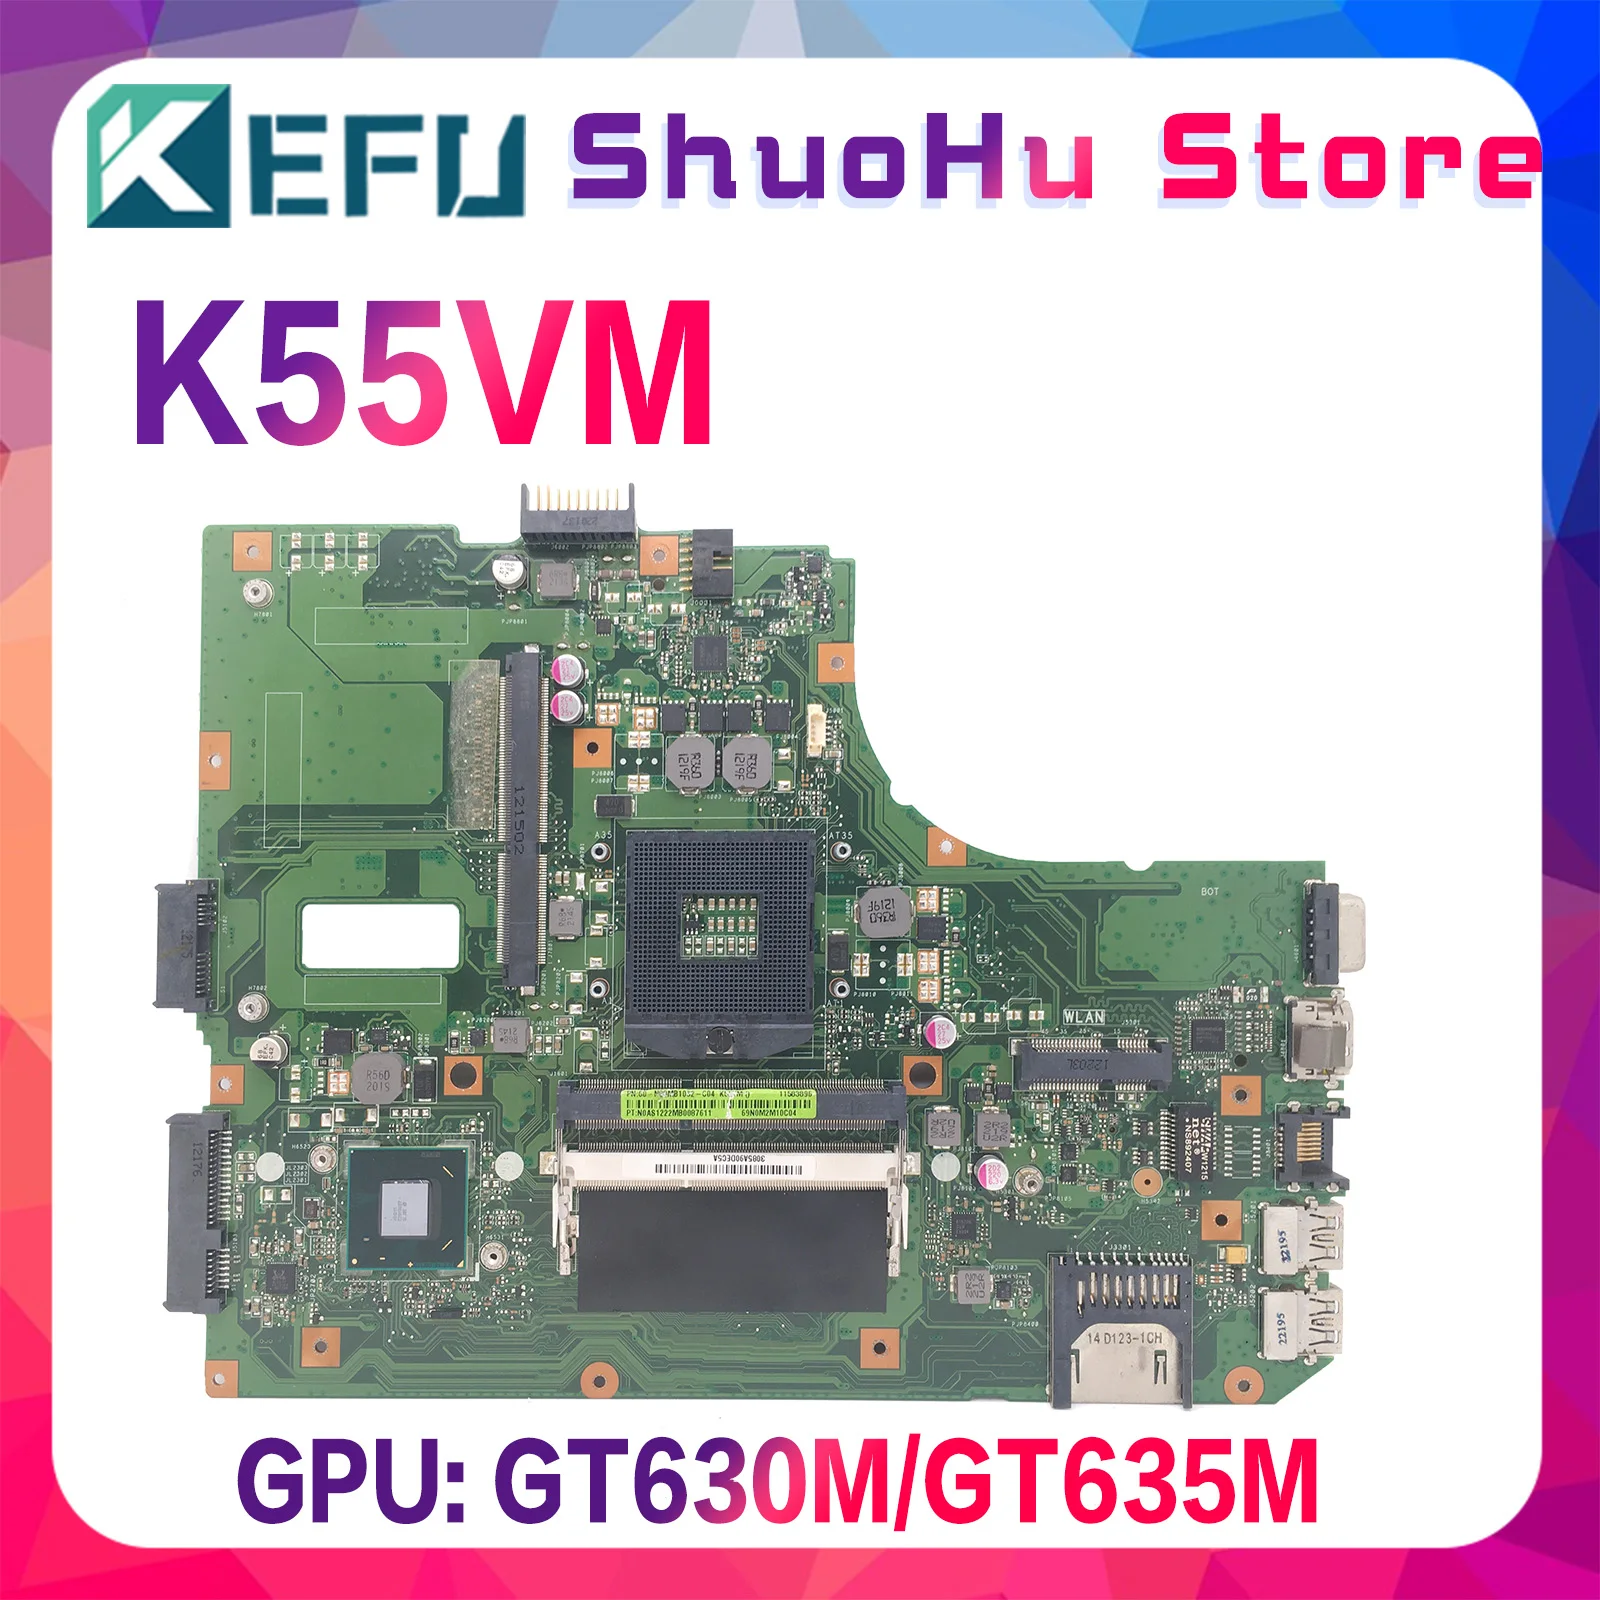 

KEFU K55VM Материнская плата ASUS K55VM K55V K55 K55VJ материнская плата для ноутбука K55VM PGA 989 GT630M/GT635M 2 Гб REV 2,2 100% полностью протестирована